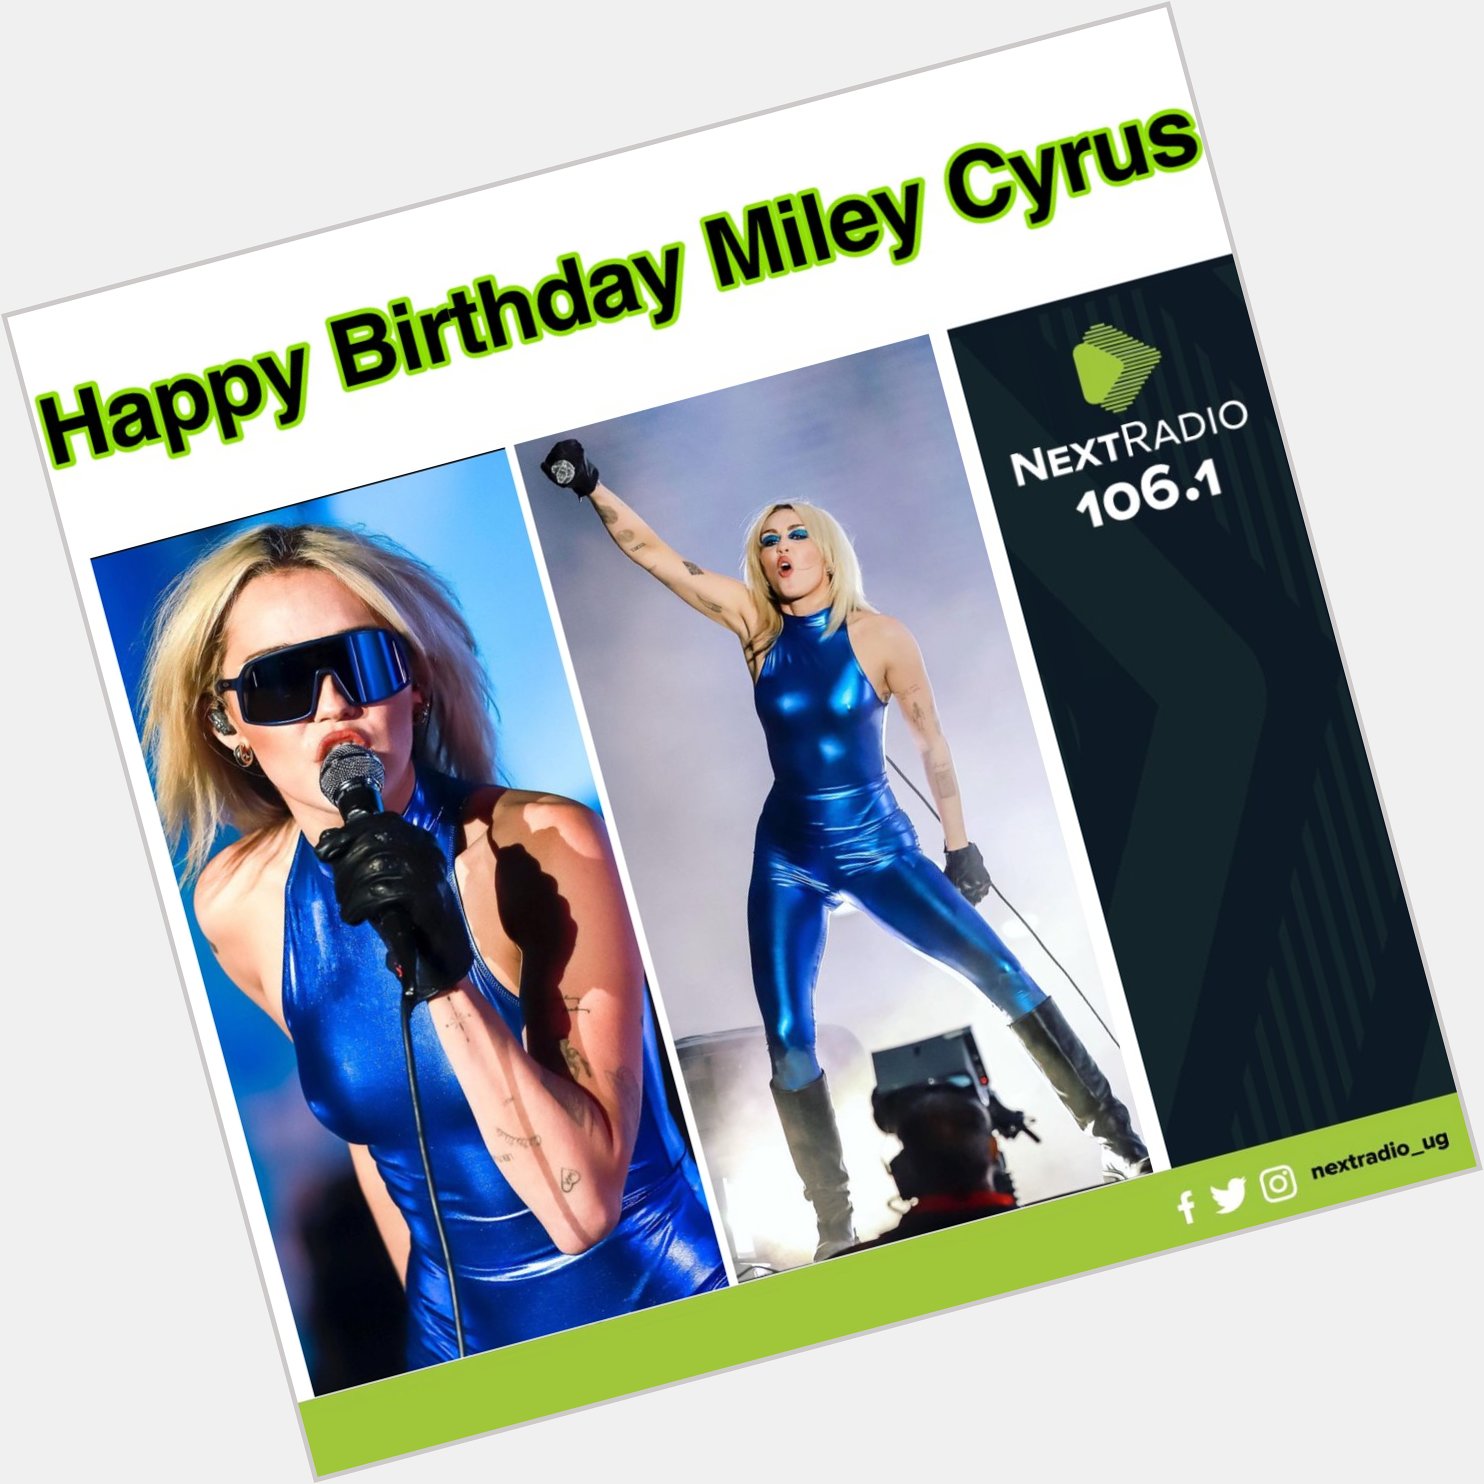 Happy Birthday Miley Cyrus.  